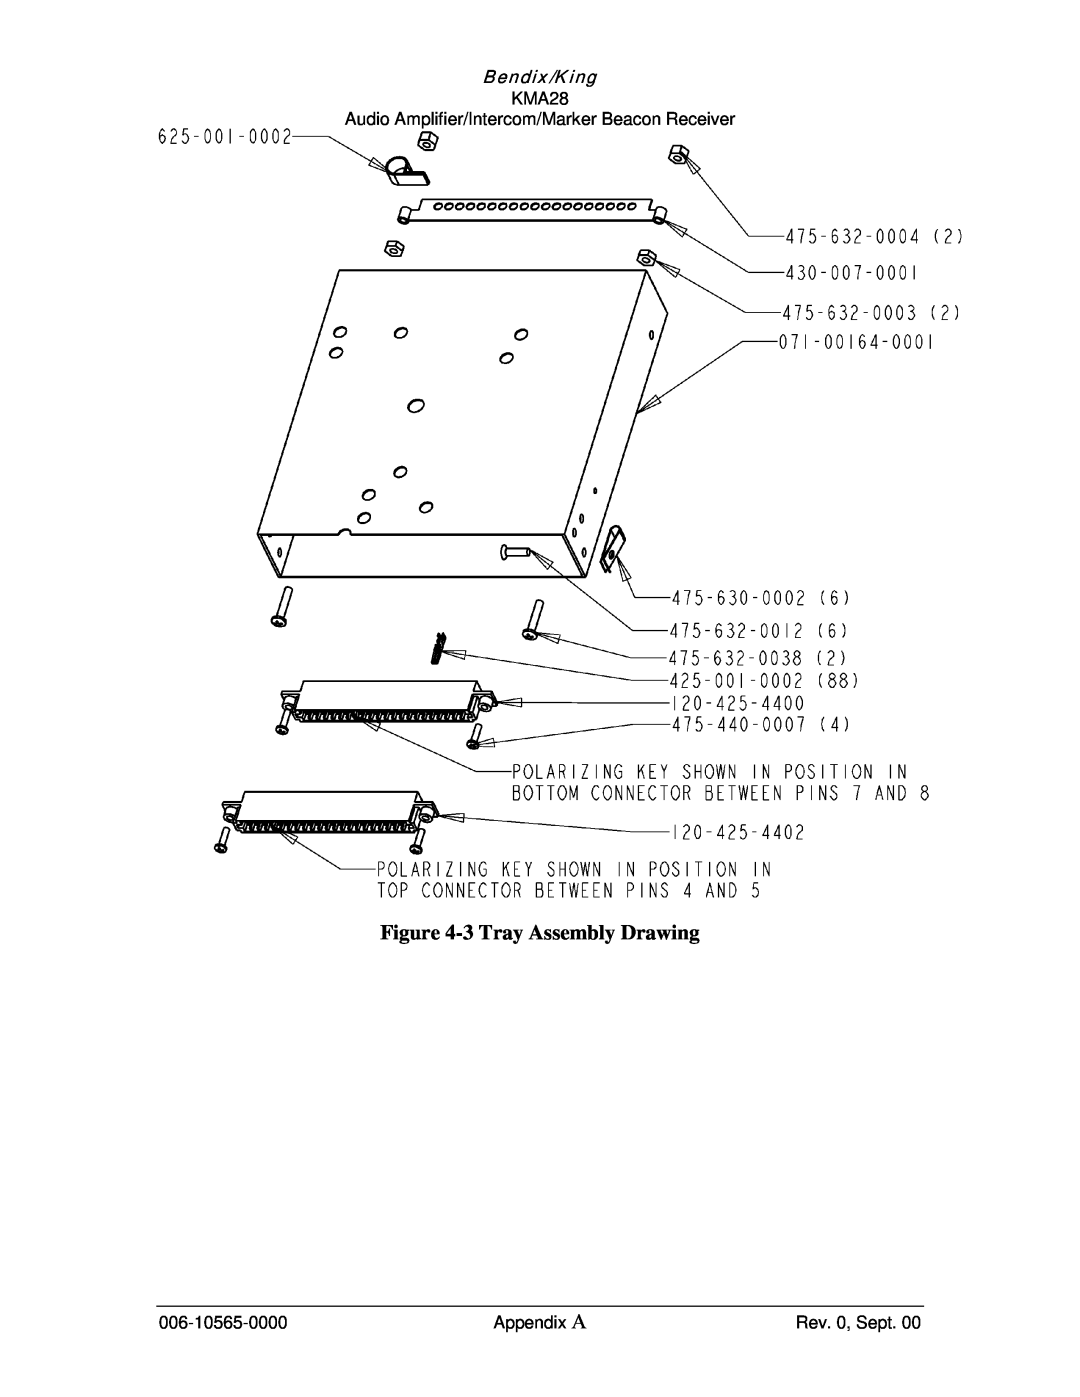 Honeywell 3 Tray Assembly Drawing, Bendix/King, KMA28 Audio Amplifier/Intercom/Marker Beacon Receiver, 006-10565-0000 